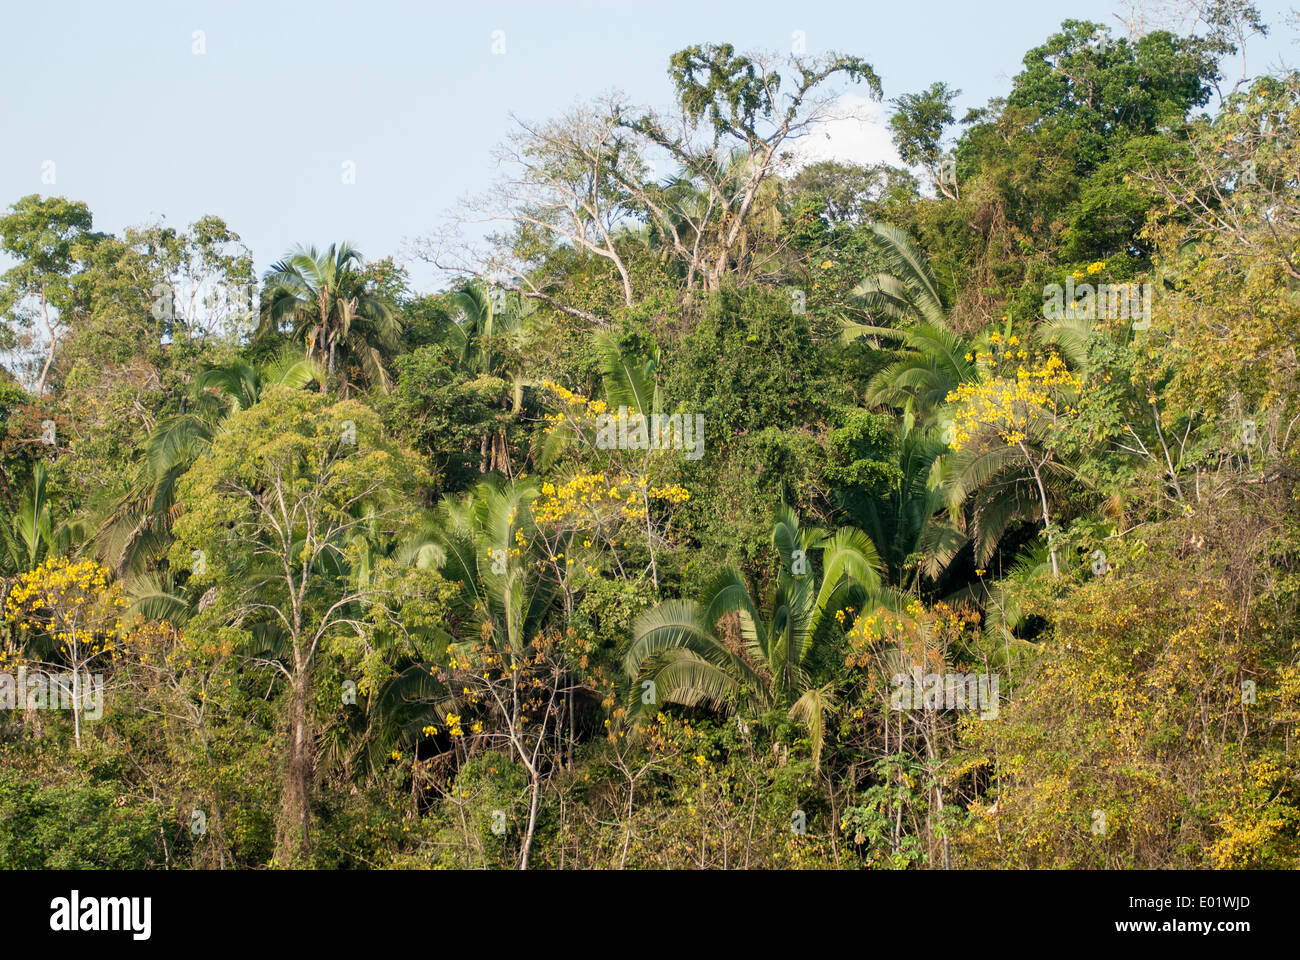 Para state, Brazil. Biodiversity of the Amazon forest. Stock Photo